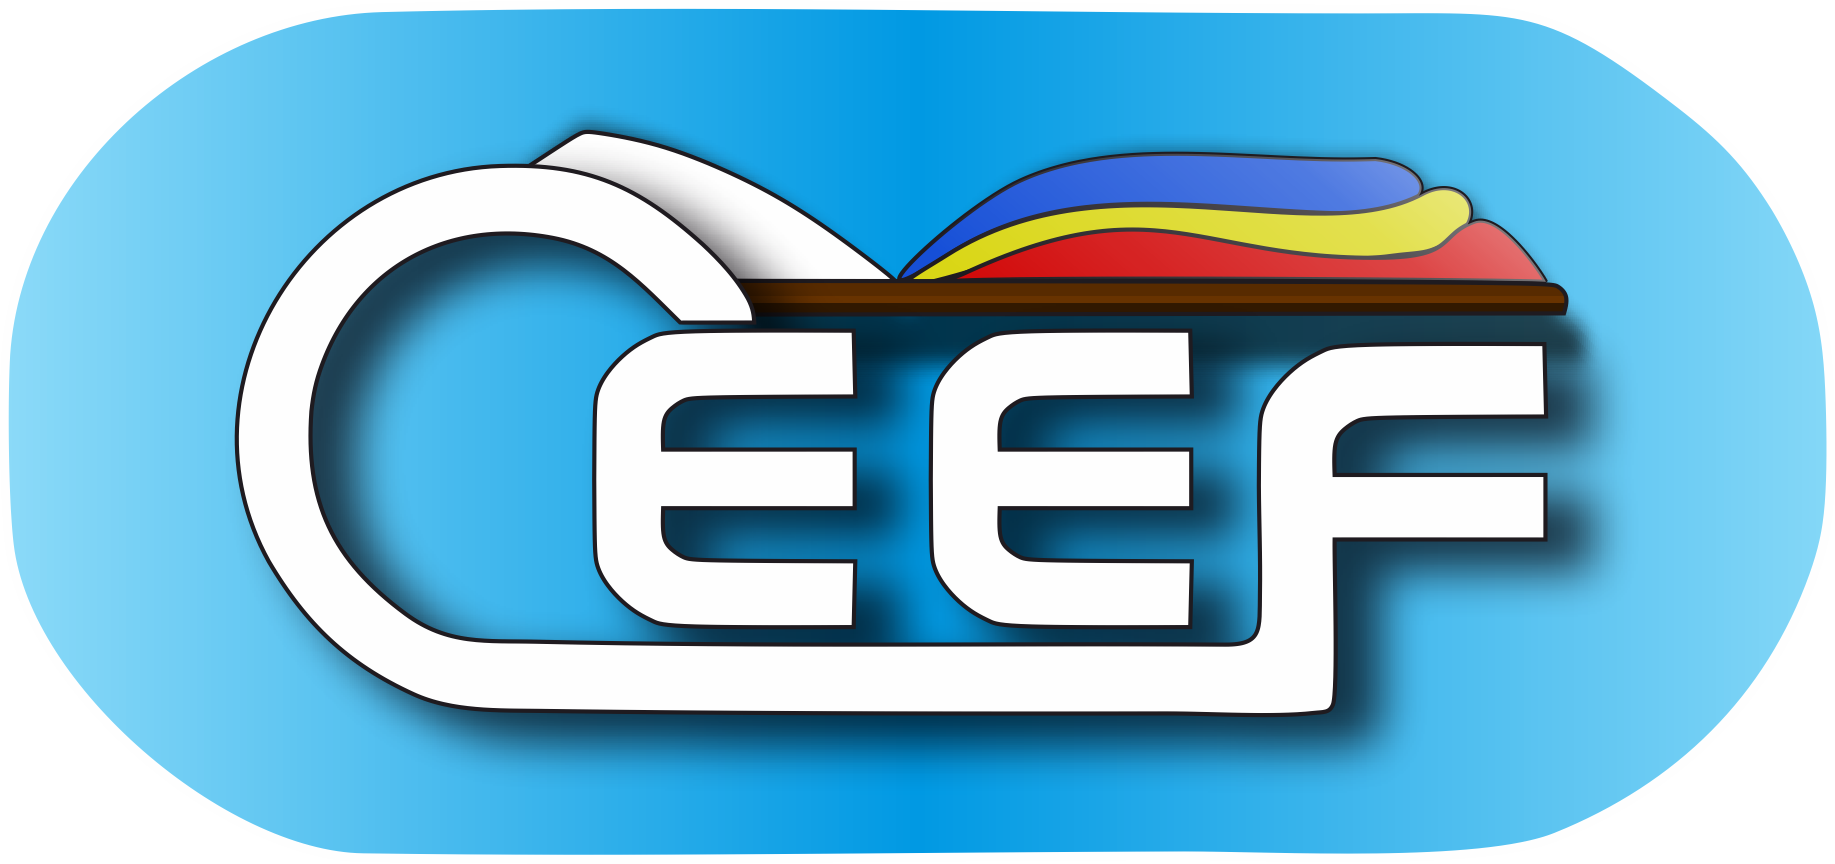 CEEF Logo